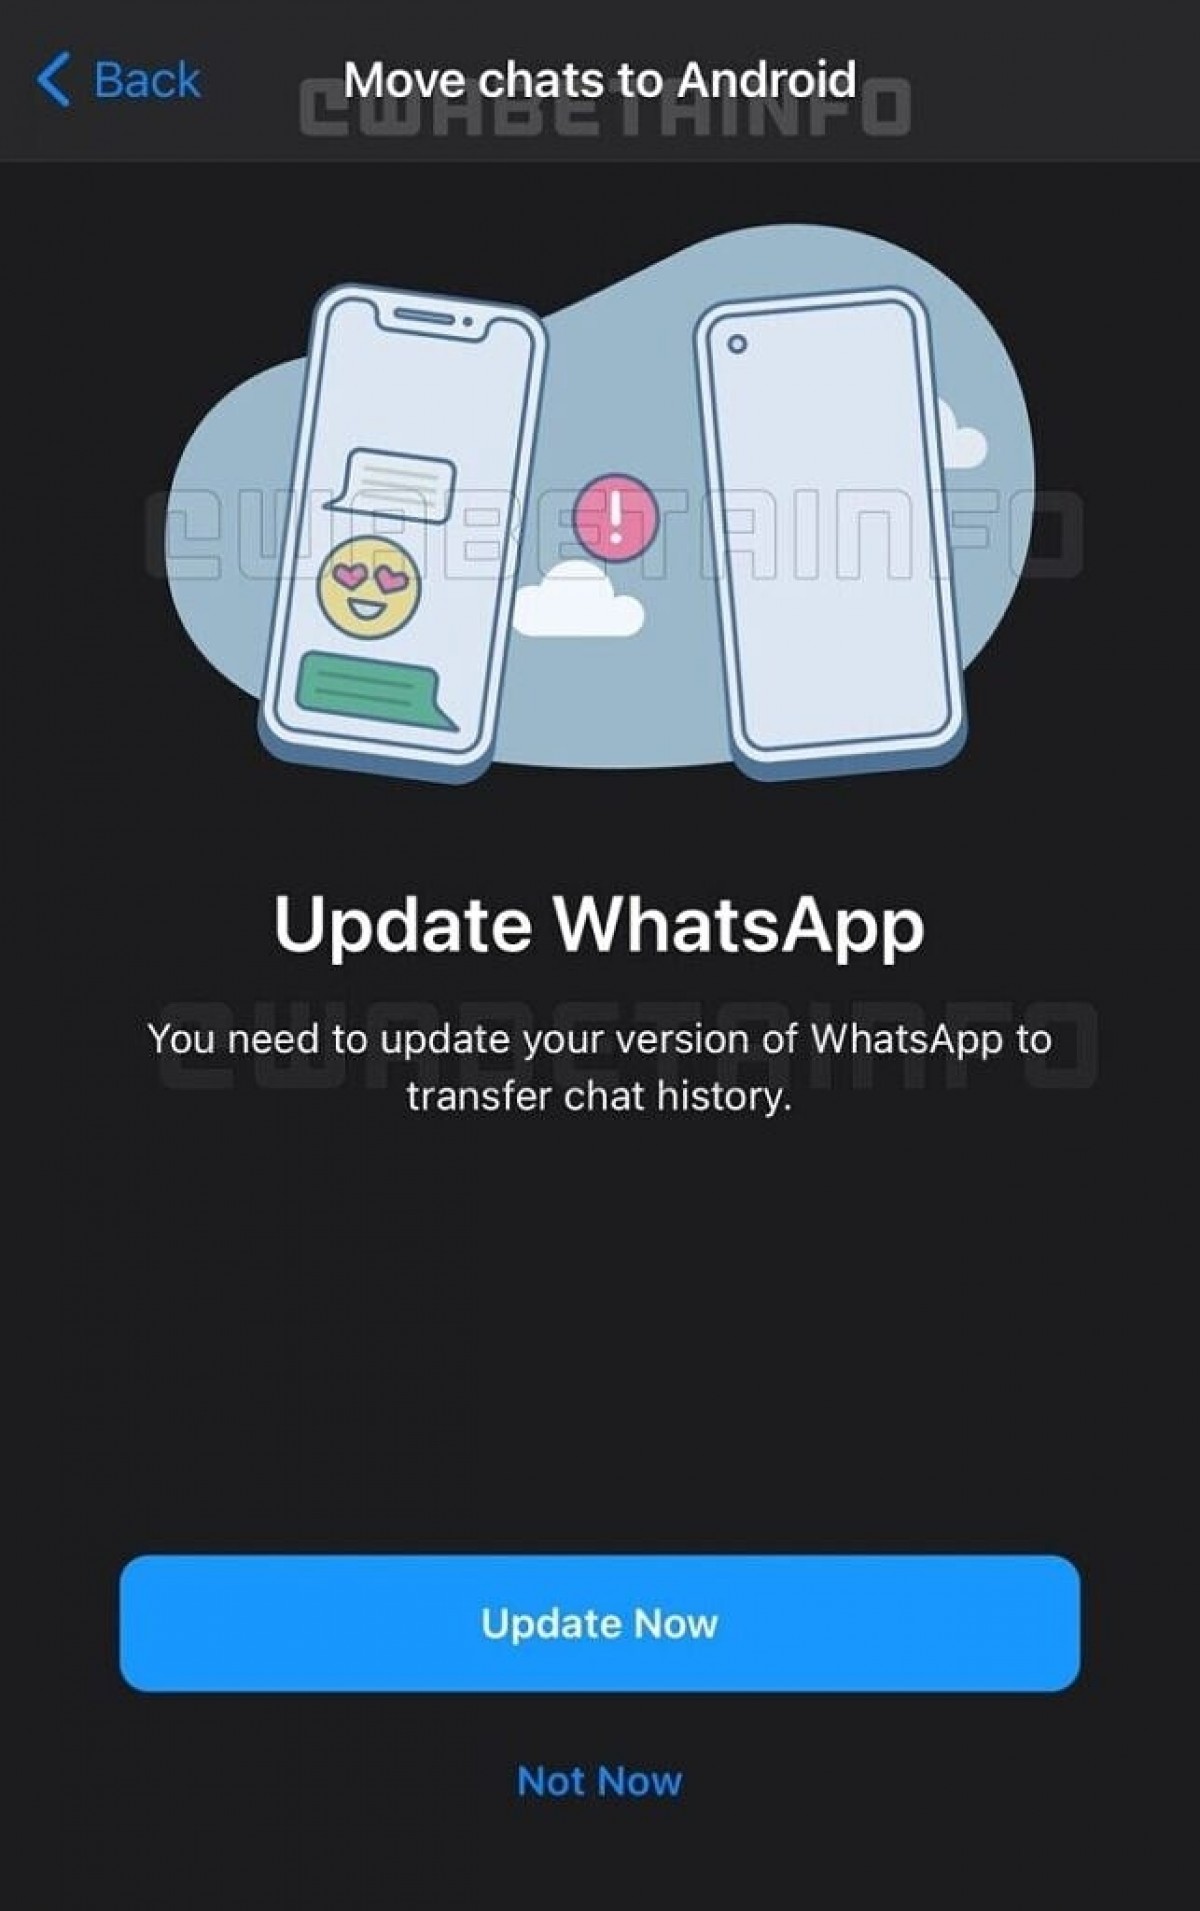 WhatsApp is working on cross-platform chat migration